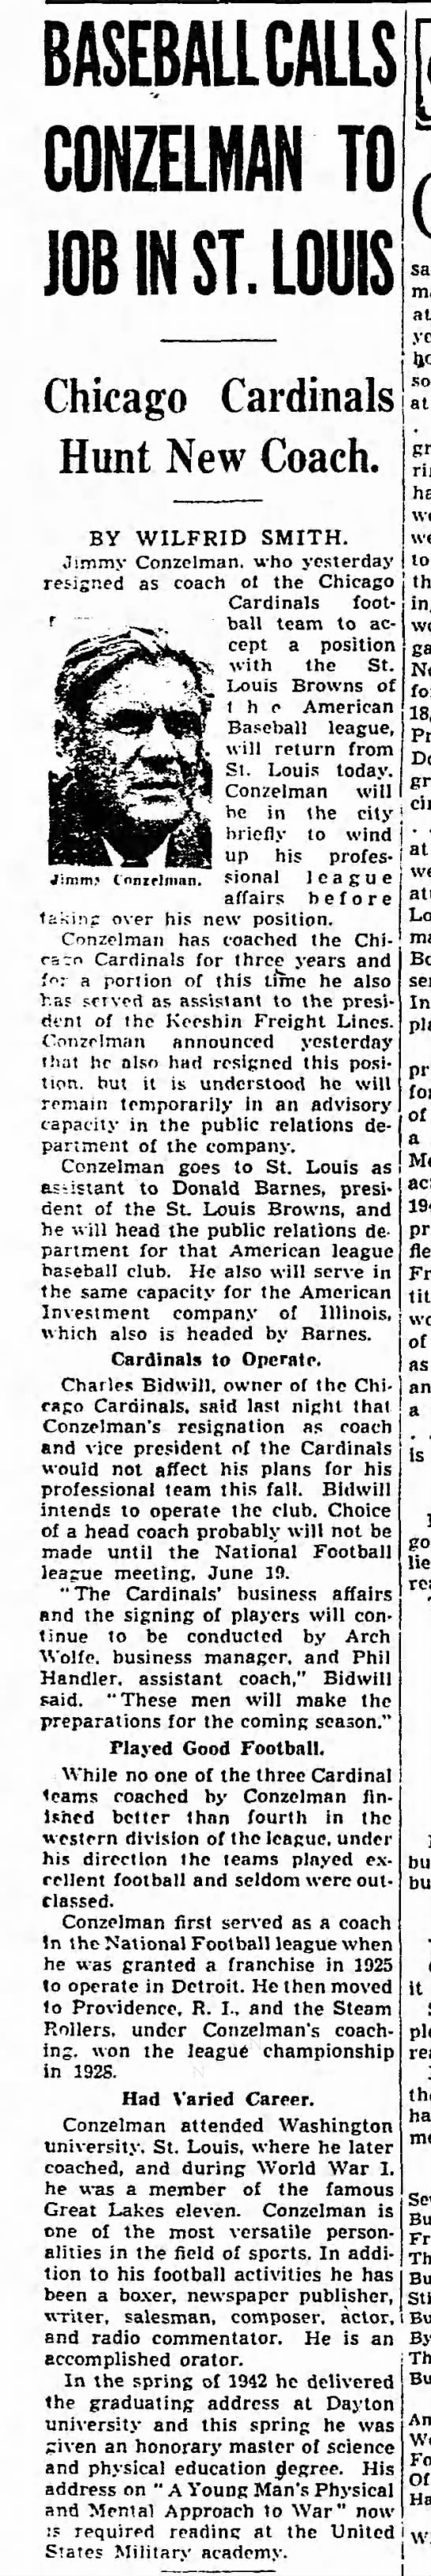 Baseball Calls Conzelman To Job in St. Louis - 